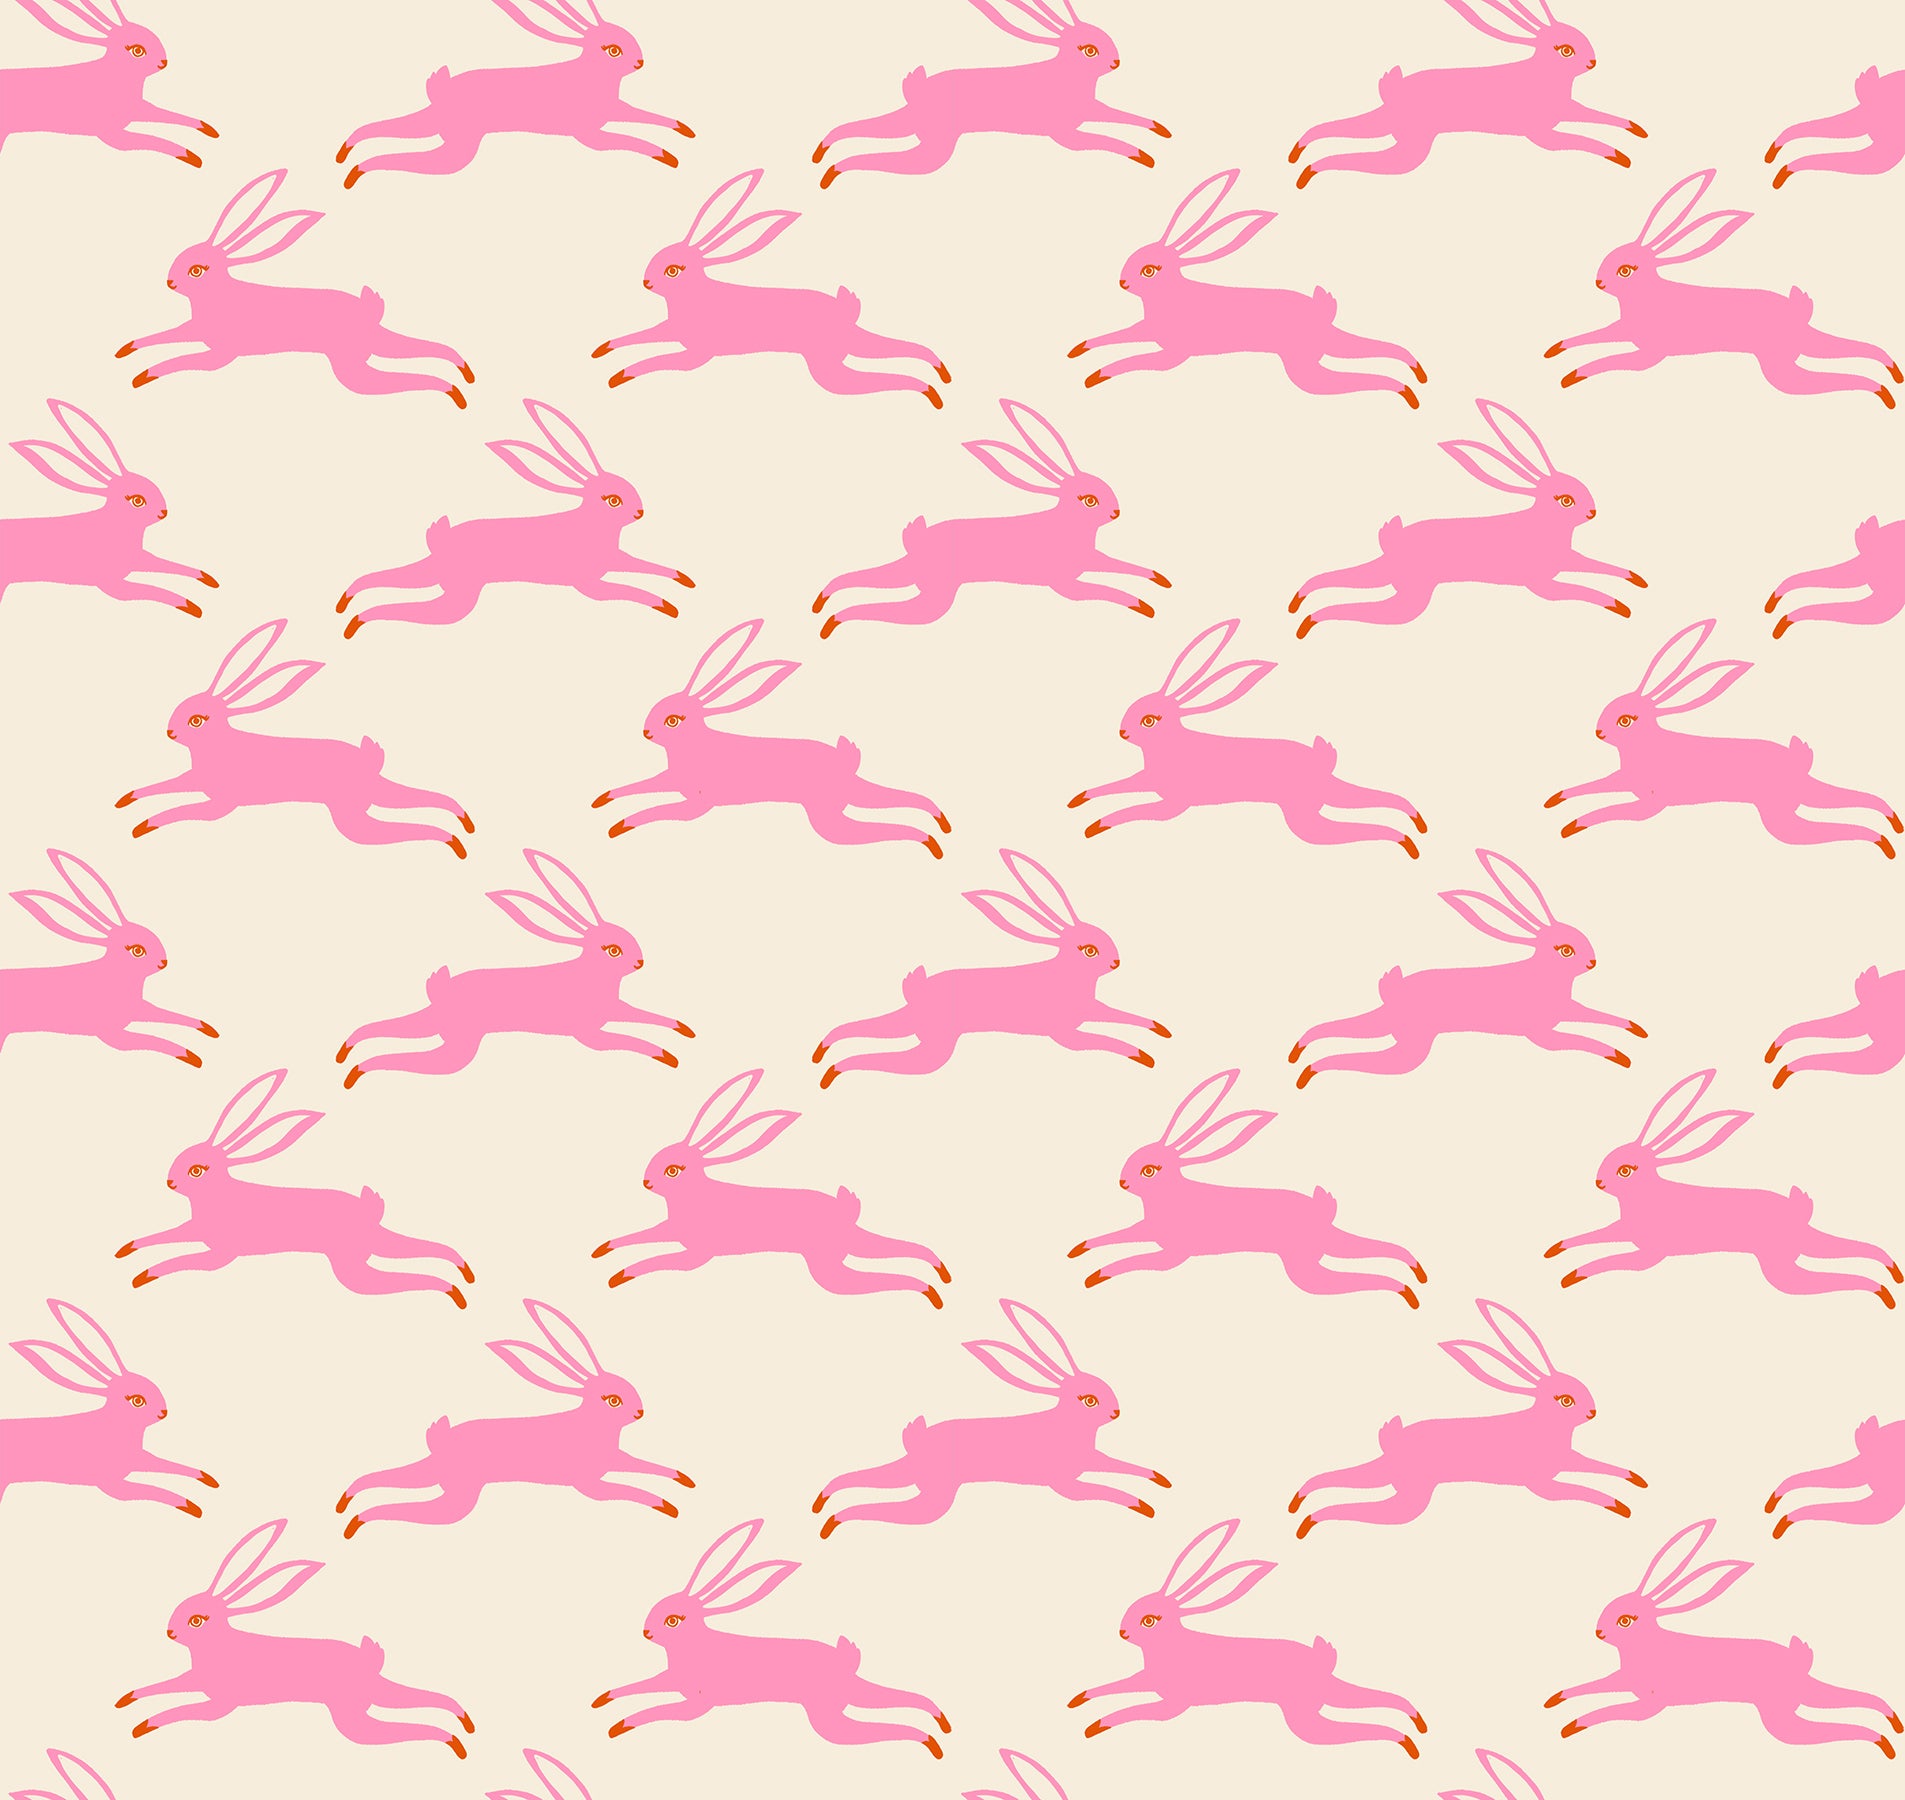 Ruby Star Society Backyard Bunny Run in Flamingo. Pink bunnies jumping on cream background. 